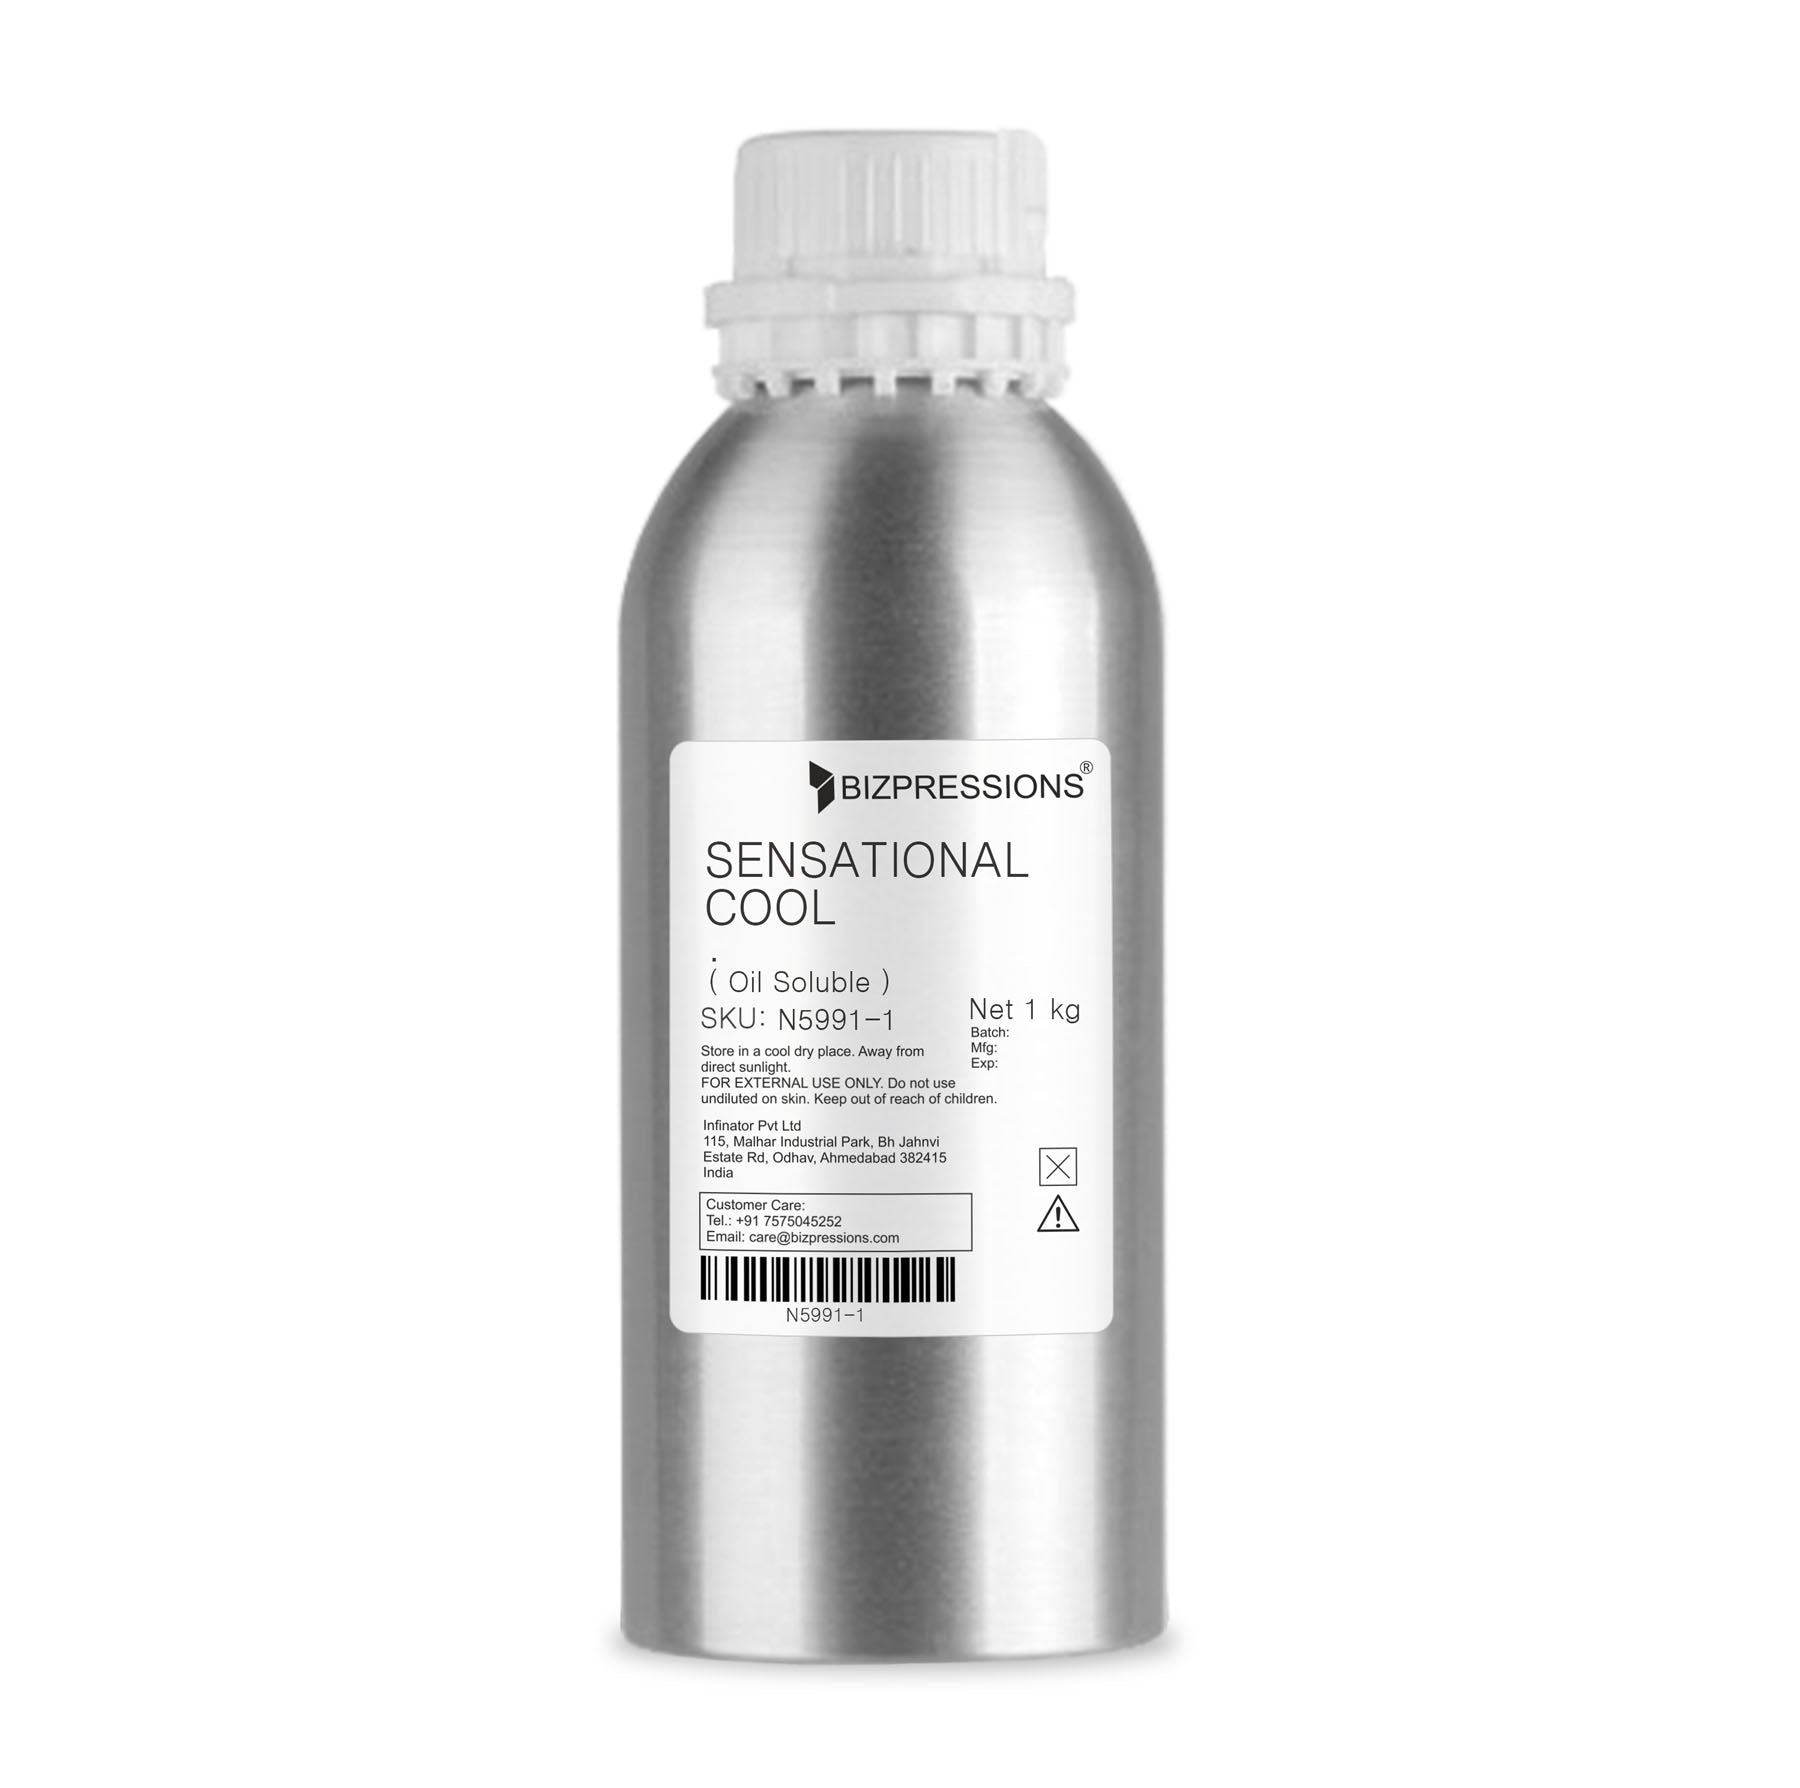 SENSATIONAL COOL - Fragrance ( Oil Soluble ) - 1 kg